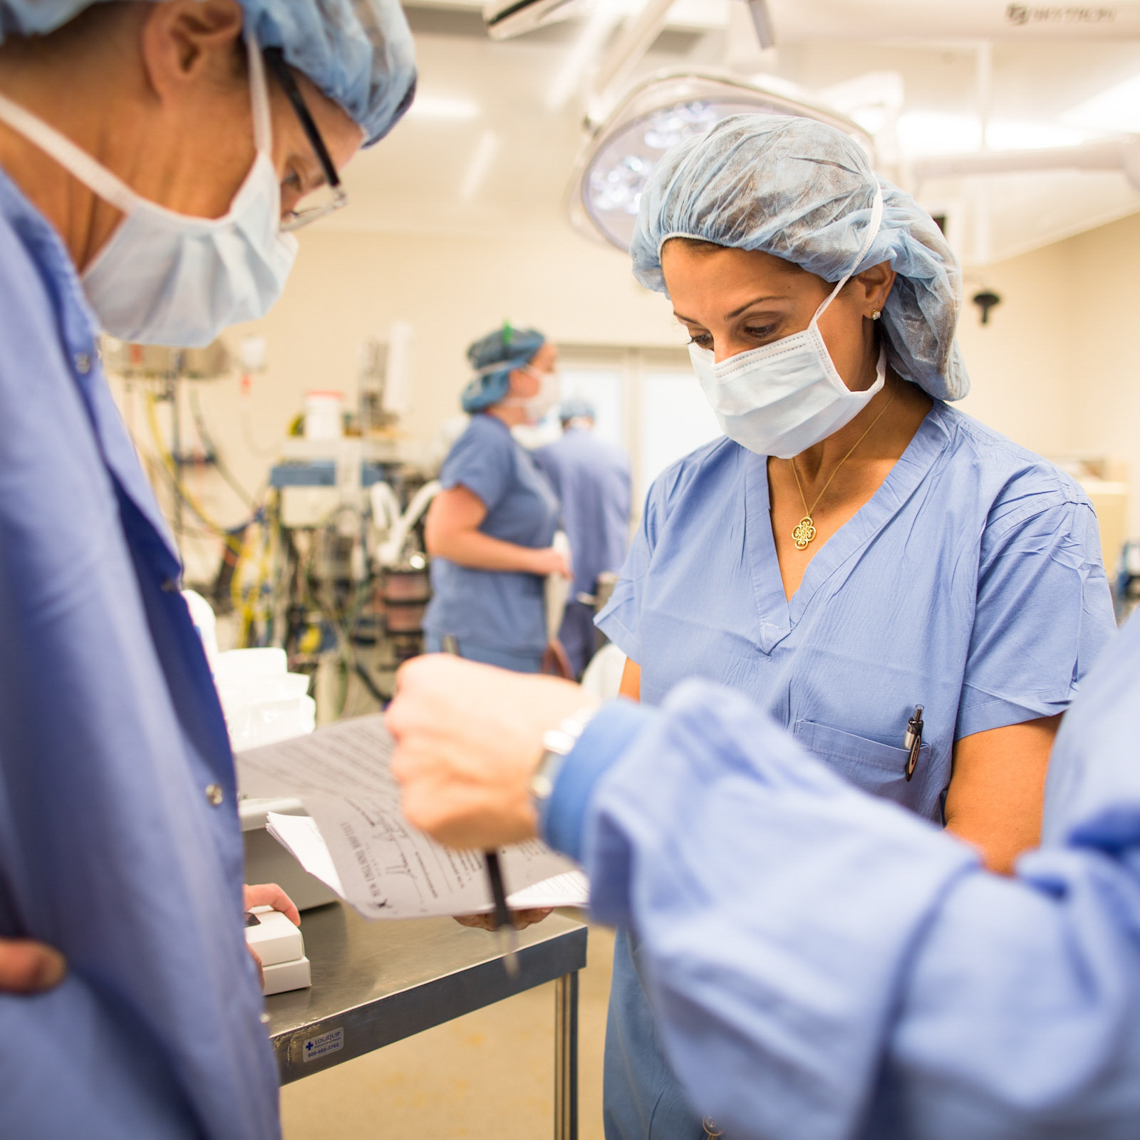 female surgeons assess a finding